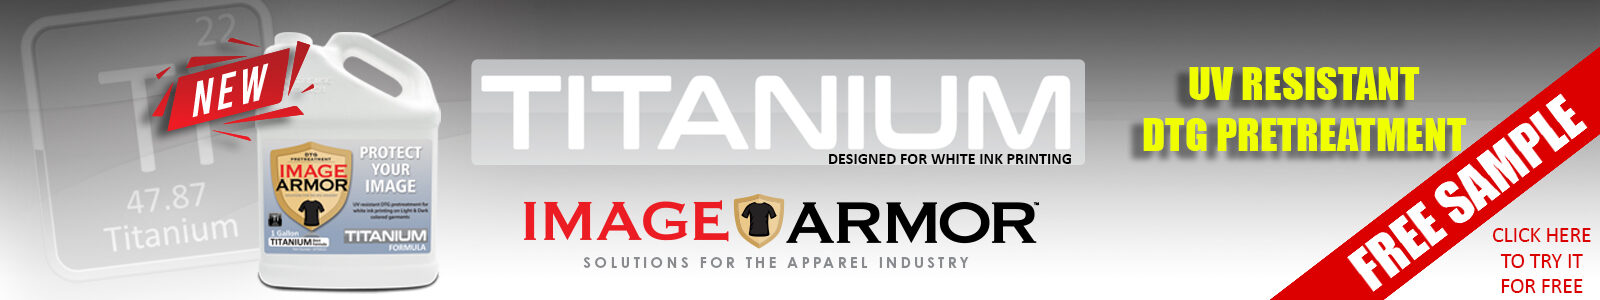 DTG Pretreatment - Titanium from Image Armor for UV Resistant Pretreatments